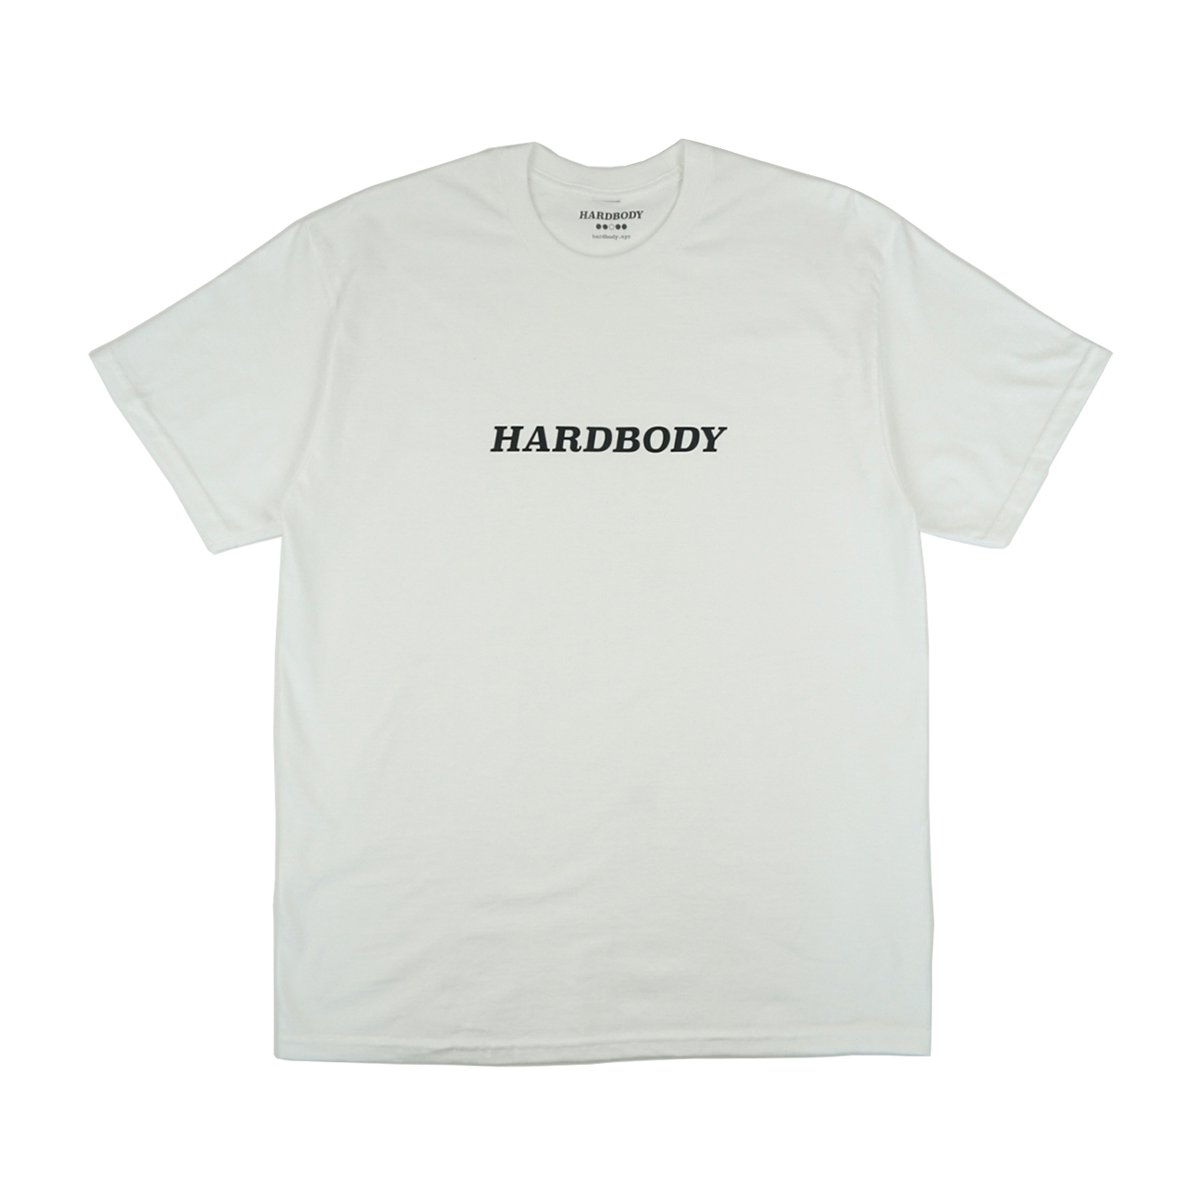 - The Dany Store - — HARDBODY LOGO T - SHIRT (WHITE)